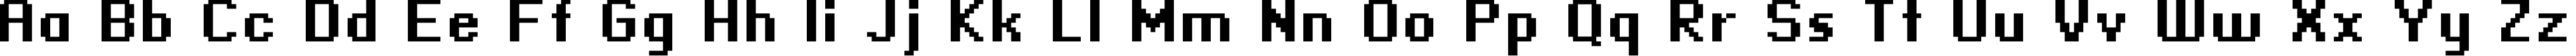 Пример написания английского алфавита шрифтом standard 09_66